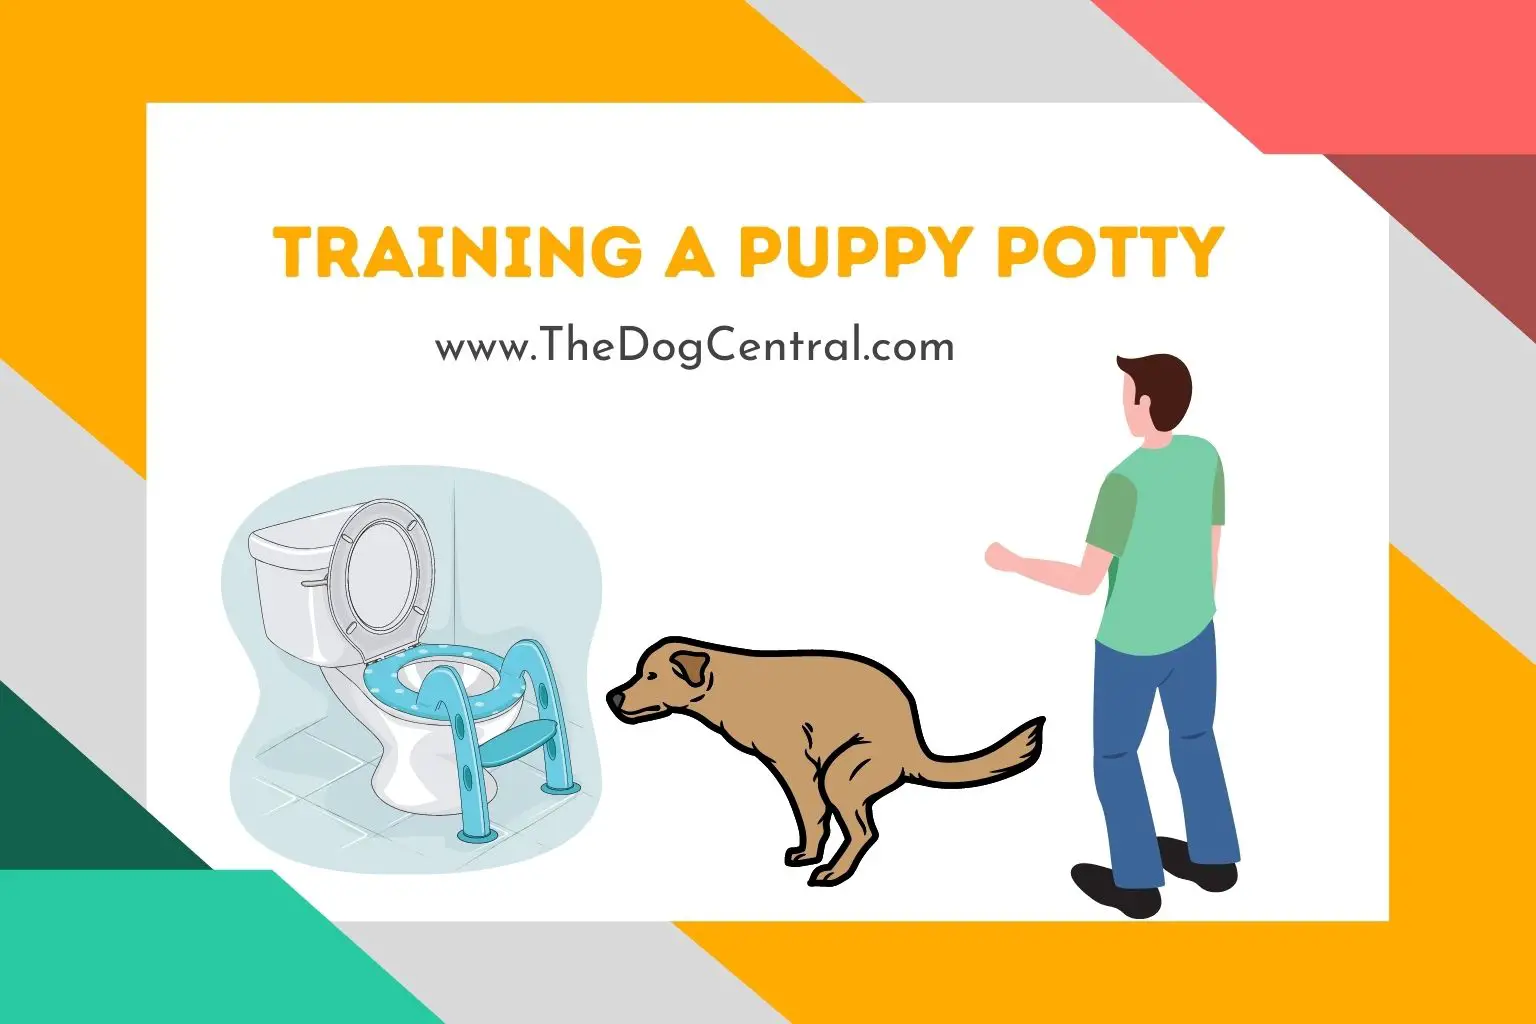 Training a Puppy to Go Potty